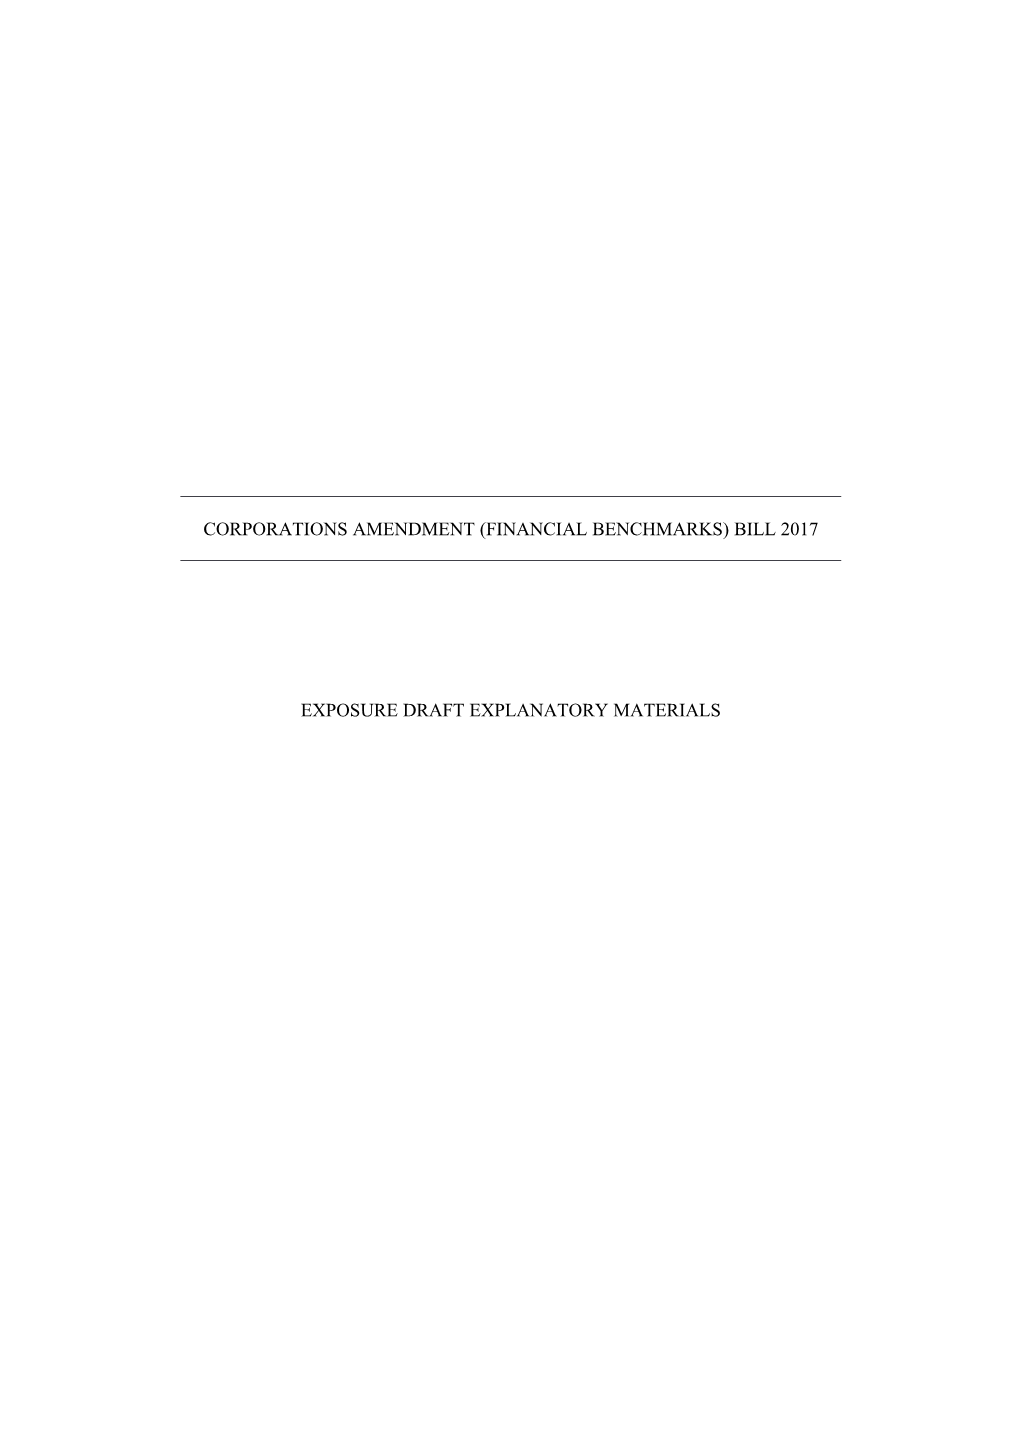 Corporations Amendment (Financial Benchmarks) Bill 2017 - Exposure Draft Explanatory Materials